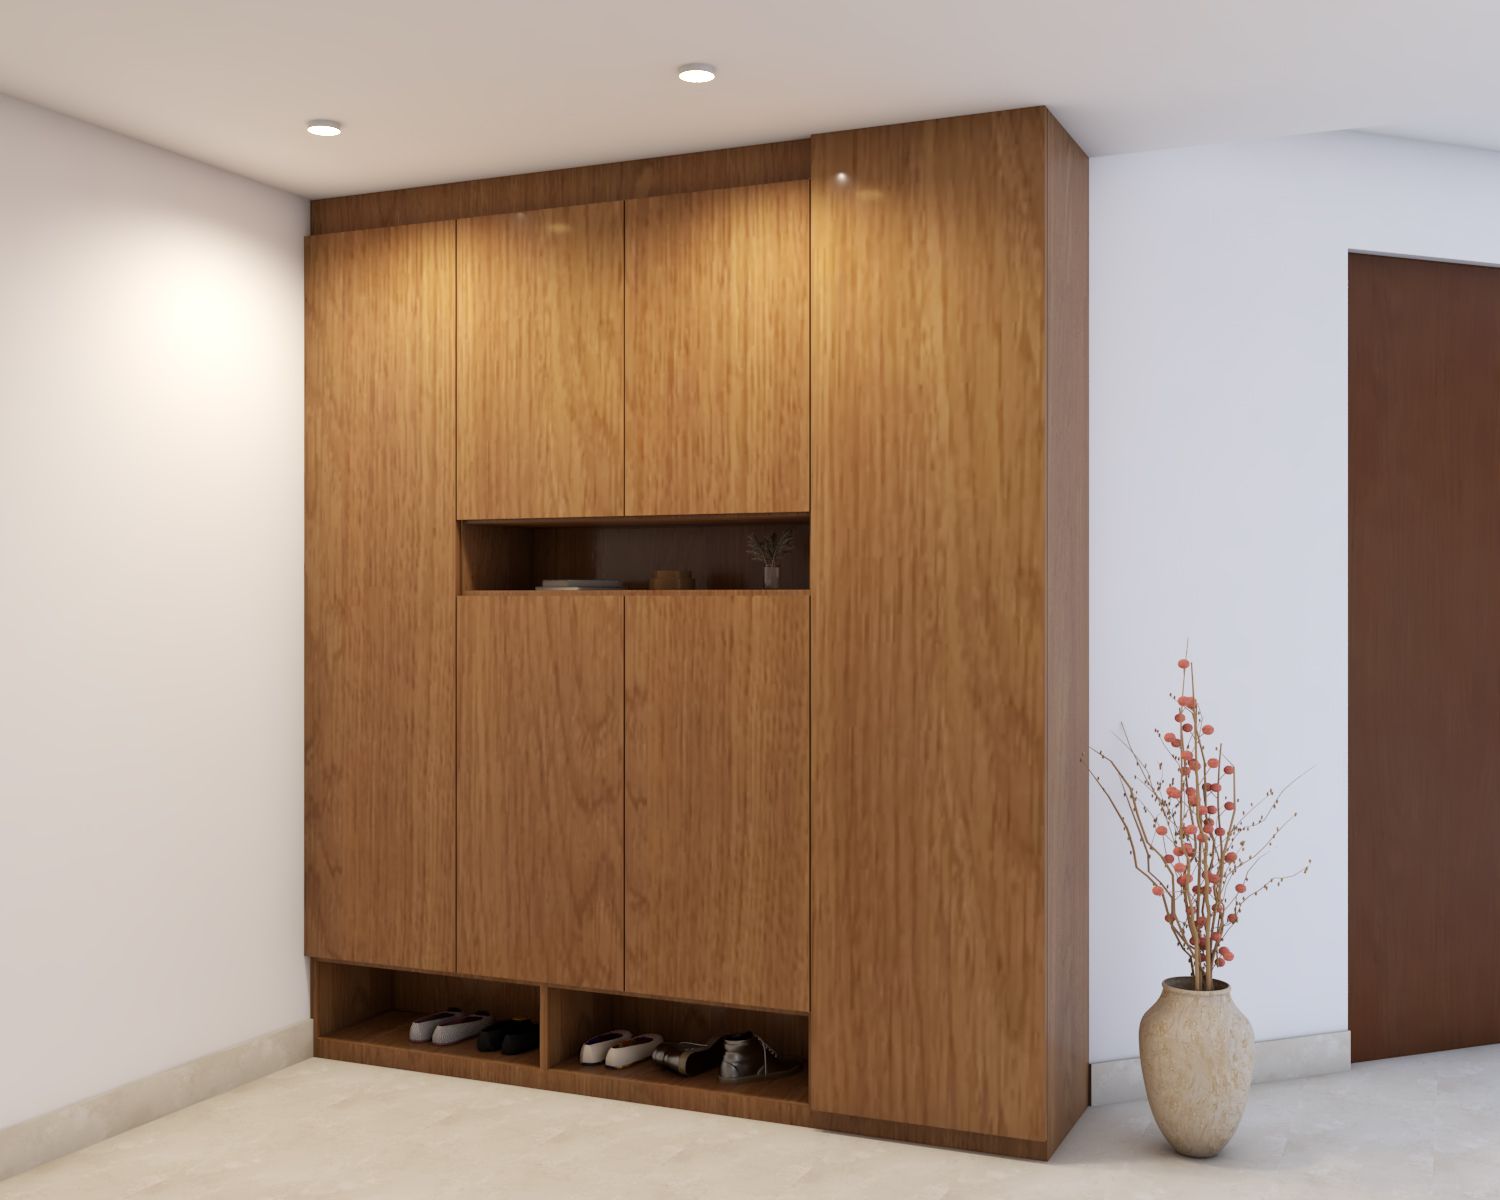 Classic Foyer Design With Dark Wooden Grain Floor-To-Ceiling Storage Unit